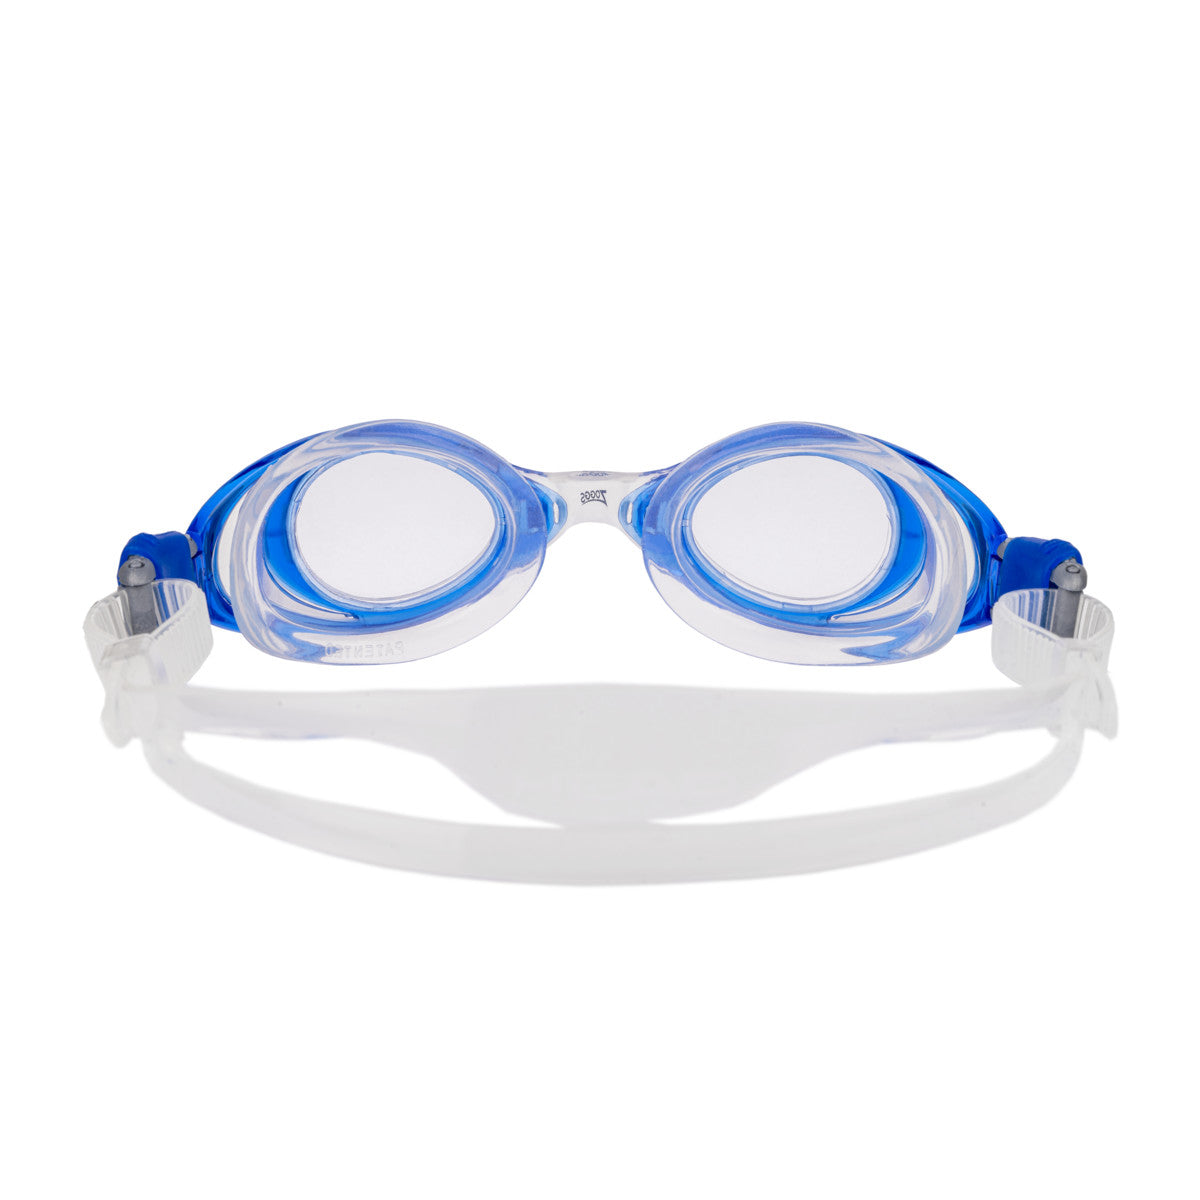 ZOGGS Vision Optical Corrective Goggle משקפת שחייה בצבע כחול/לבן עם עדשות אופטיות מראה